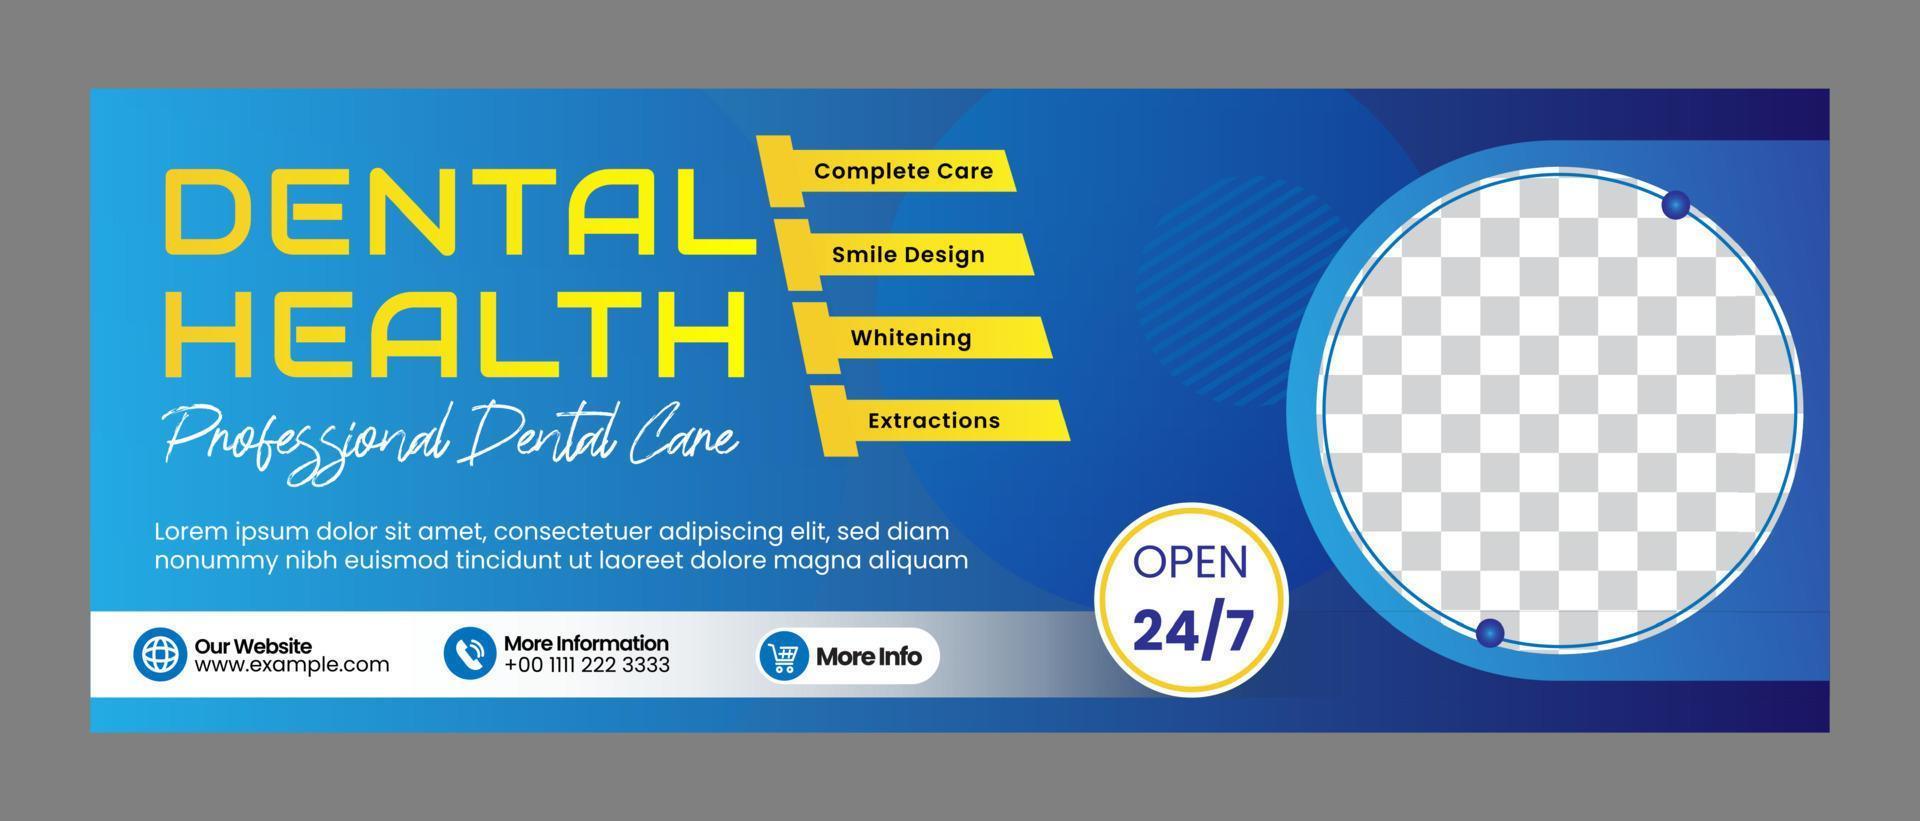 Dental banner template or Medical health for social media banner vector